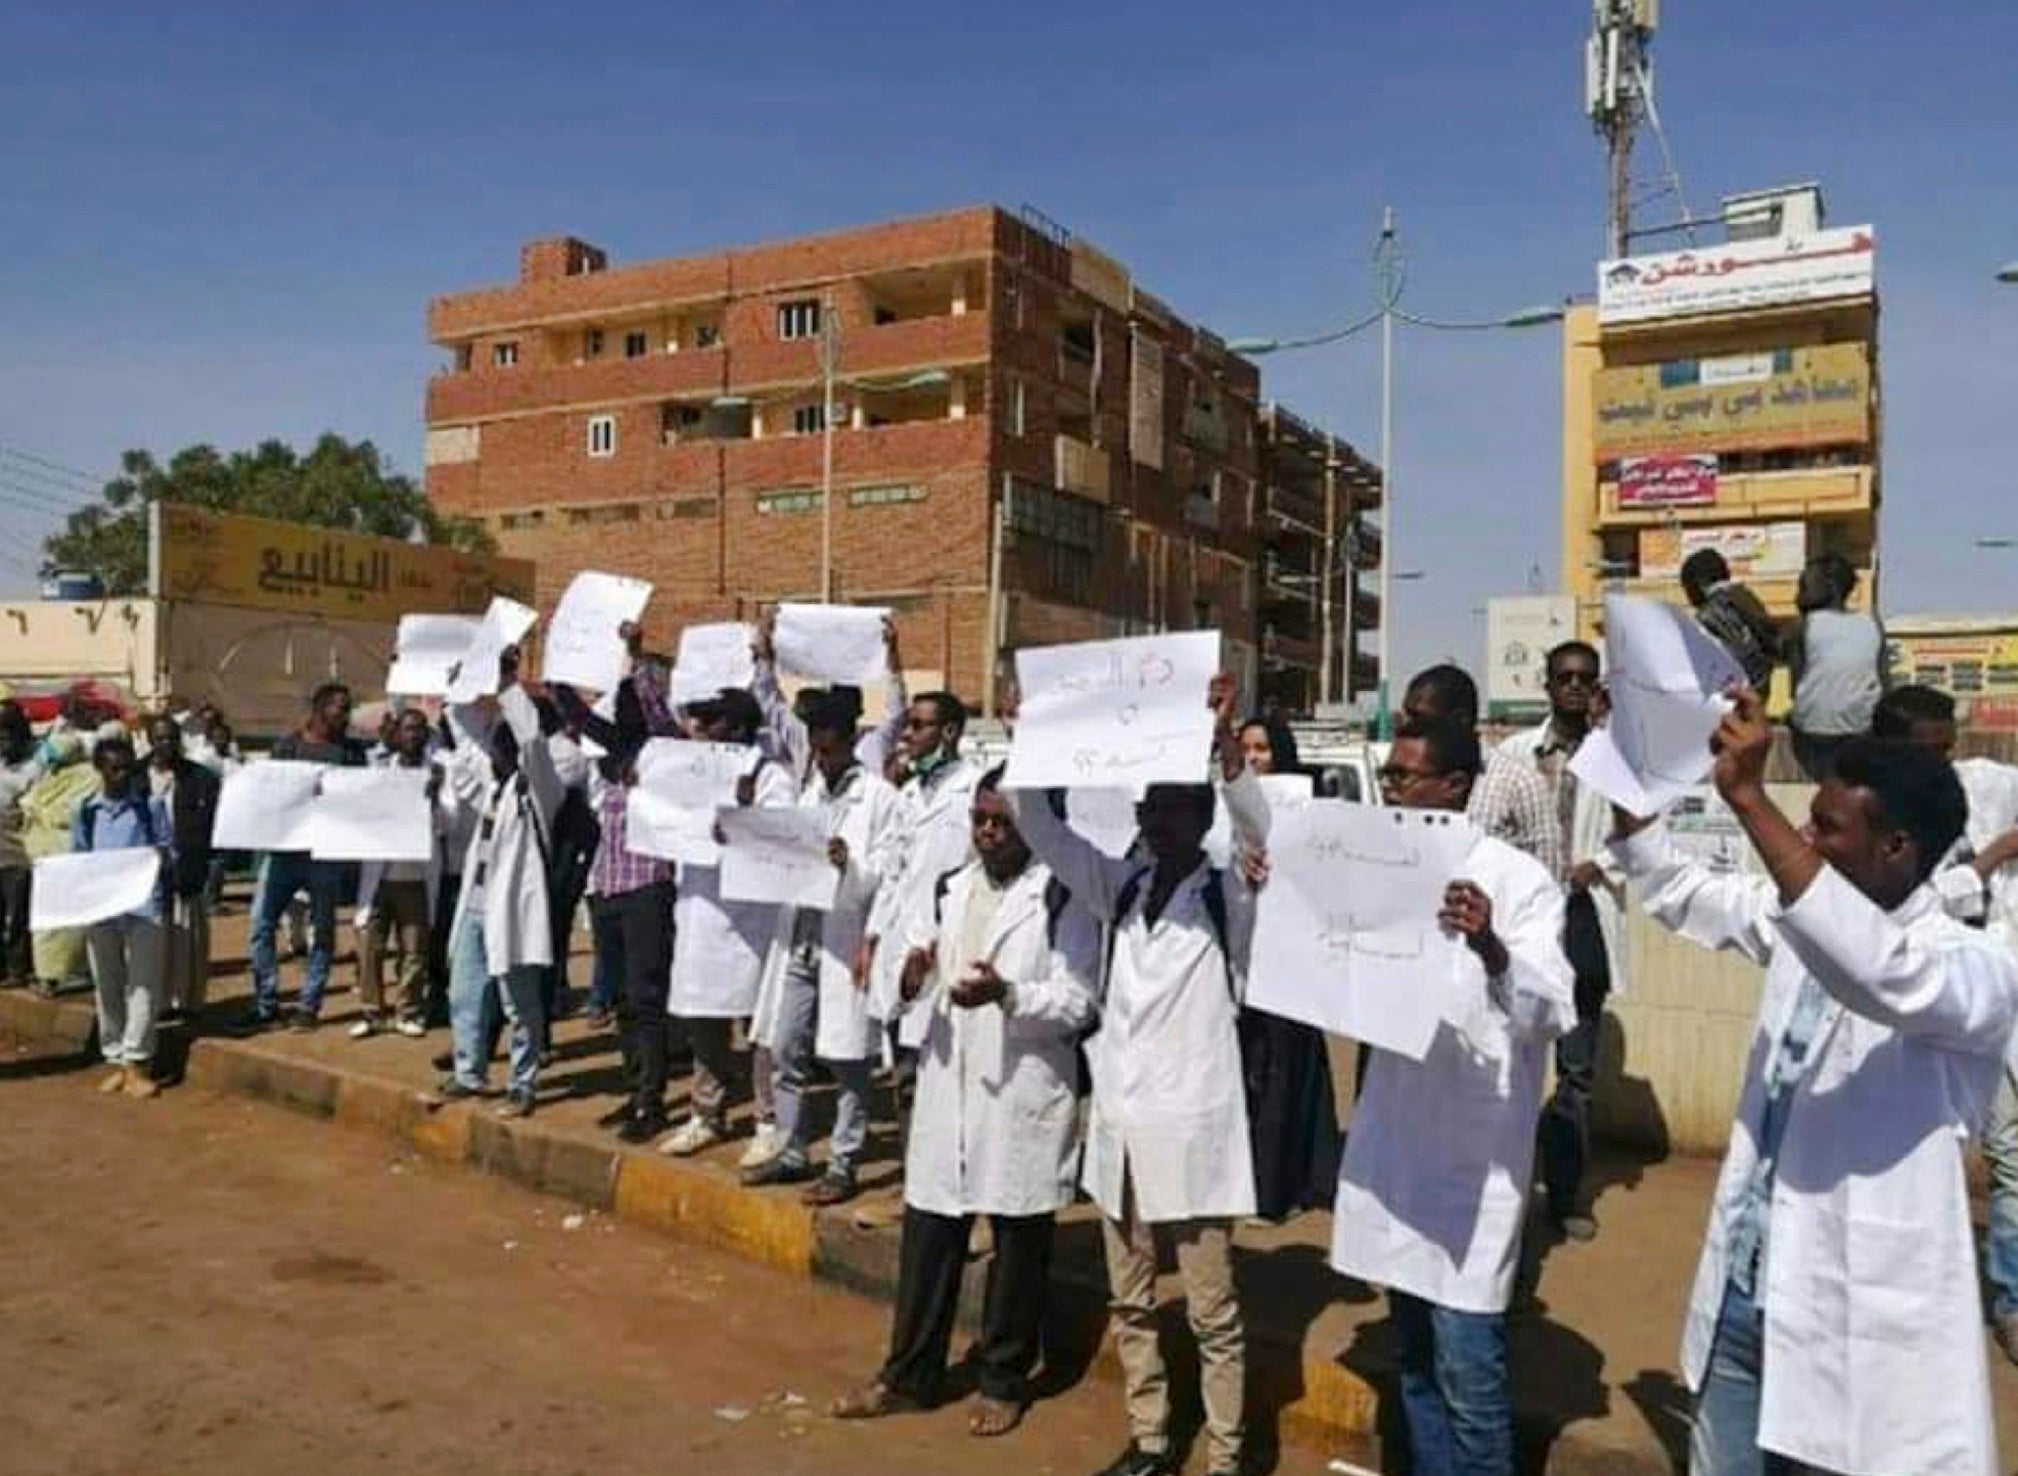 Omdurman Islamic University students hold a demonstration in Khartoum, Sudan on 22 December